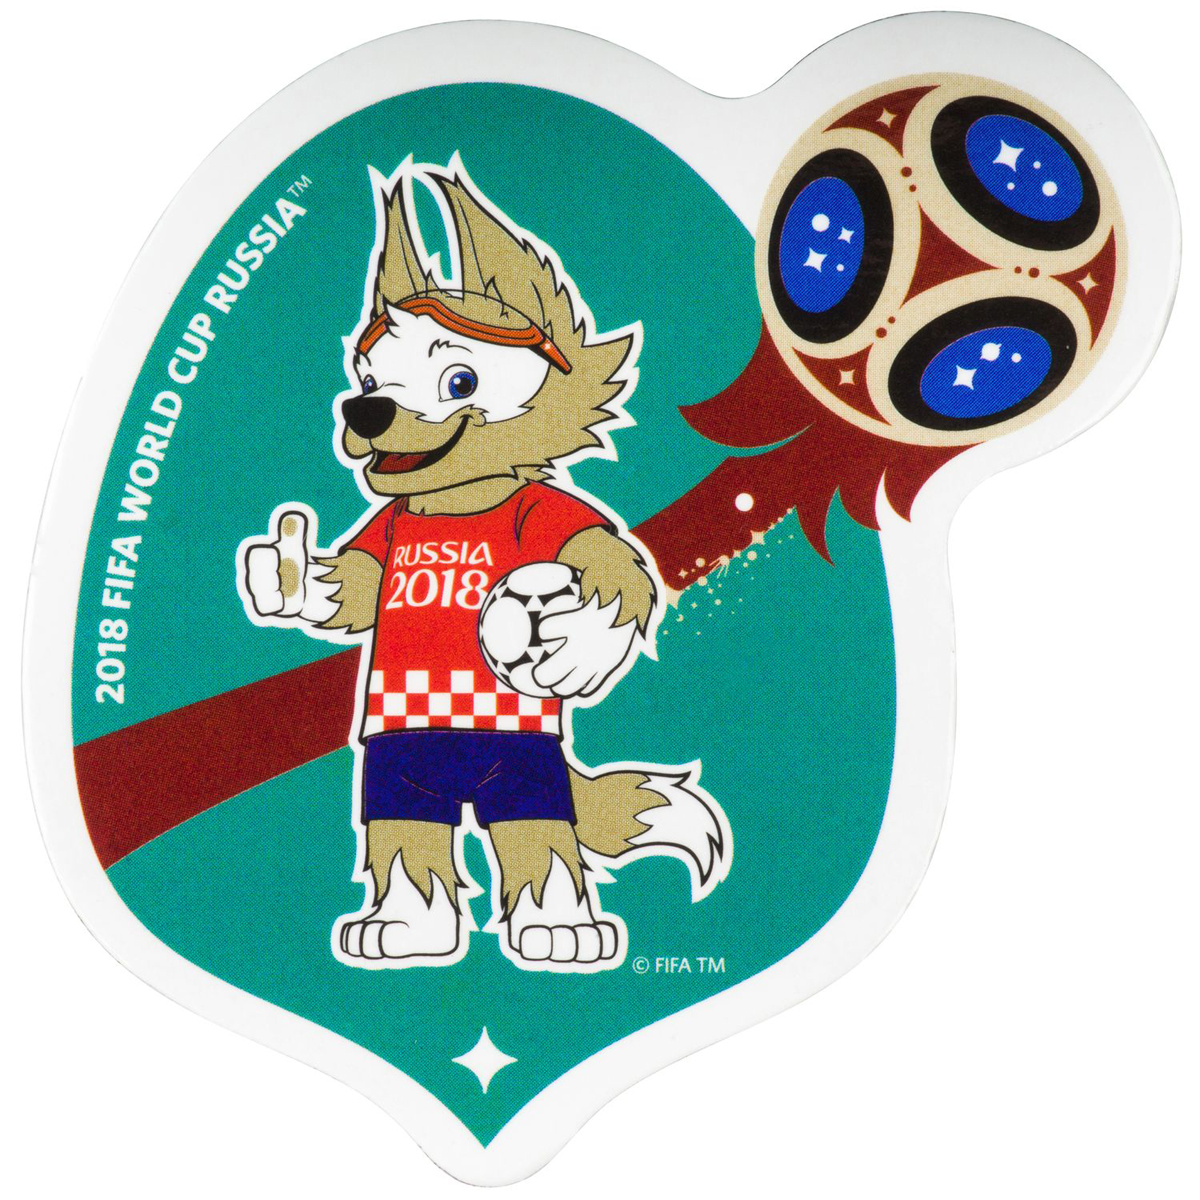 фото Магнит сувенирный FIFA 2018 "Забивака Хорватия", 8 х 11 см. СН541 Fifa world cup russia